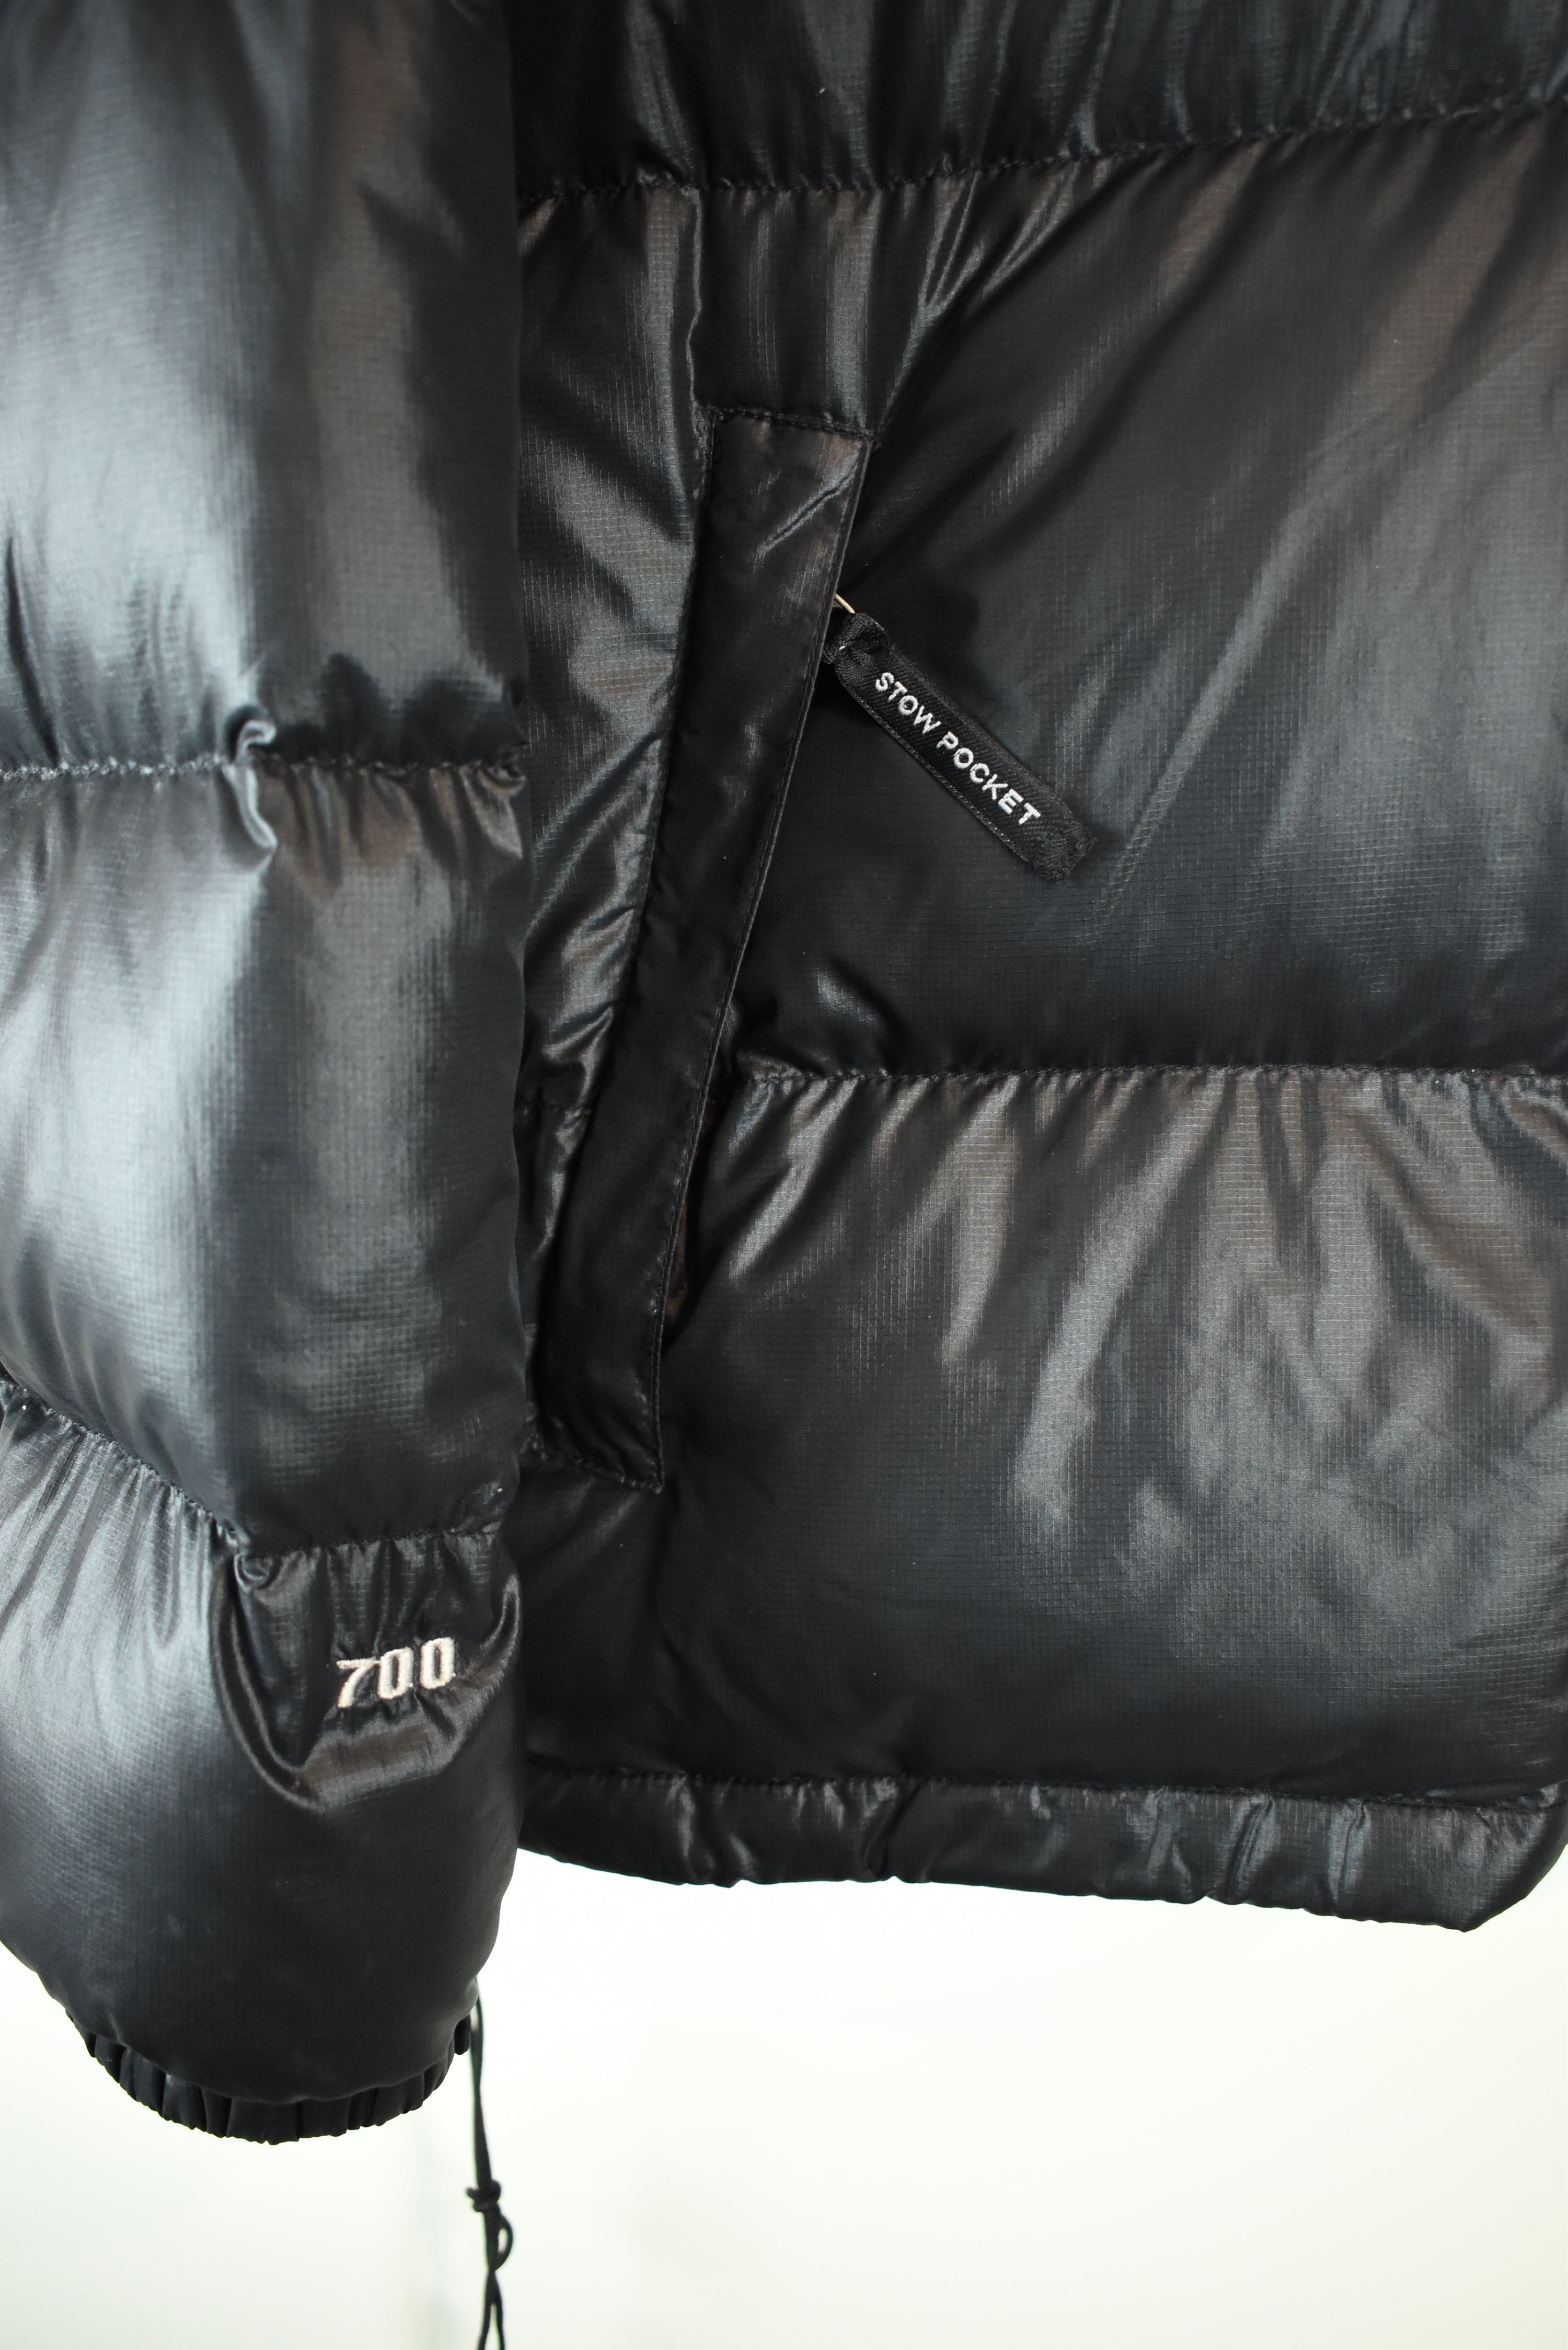 Vintage The North Face 700 Nuptse Puffer Jacket Shiny Black - Extra Large | Vintage Clothing